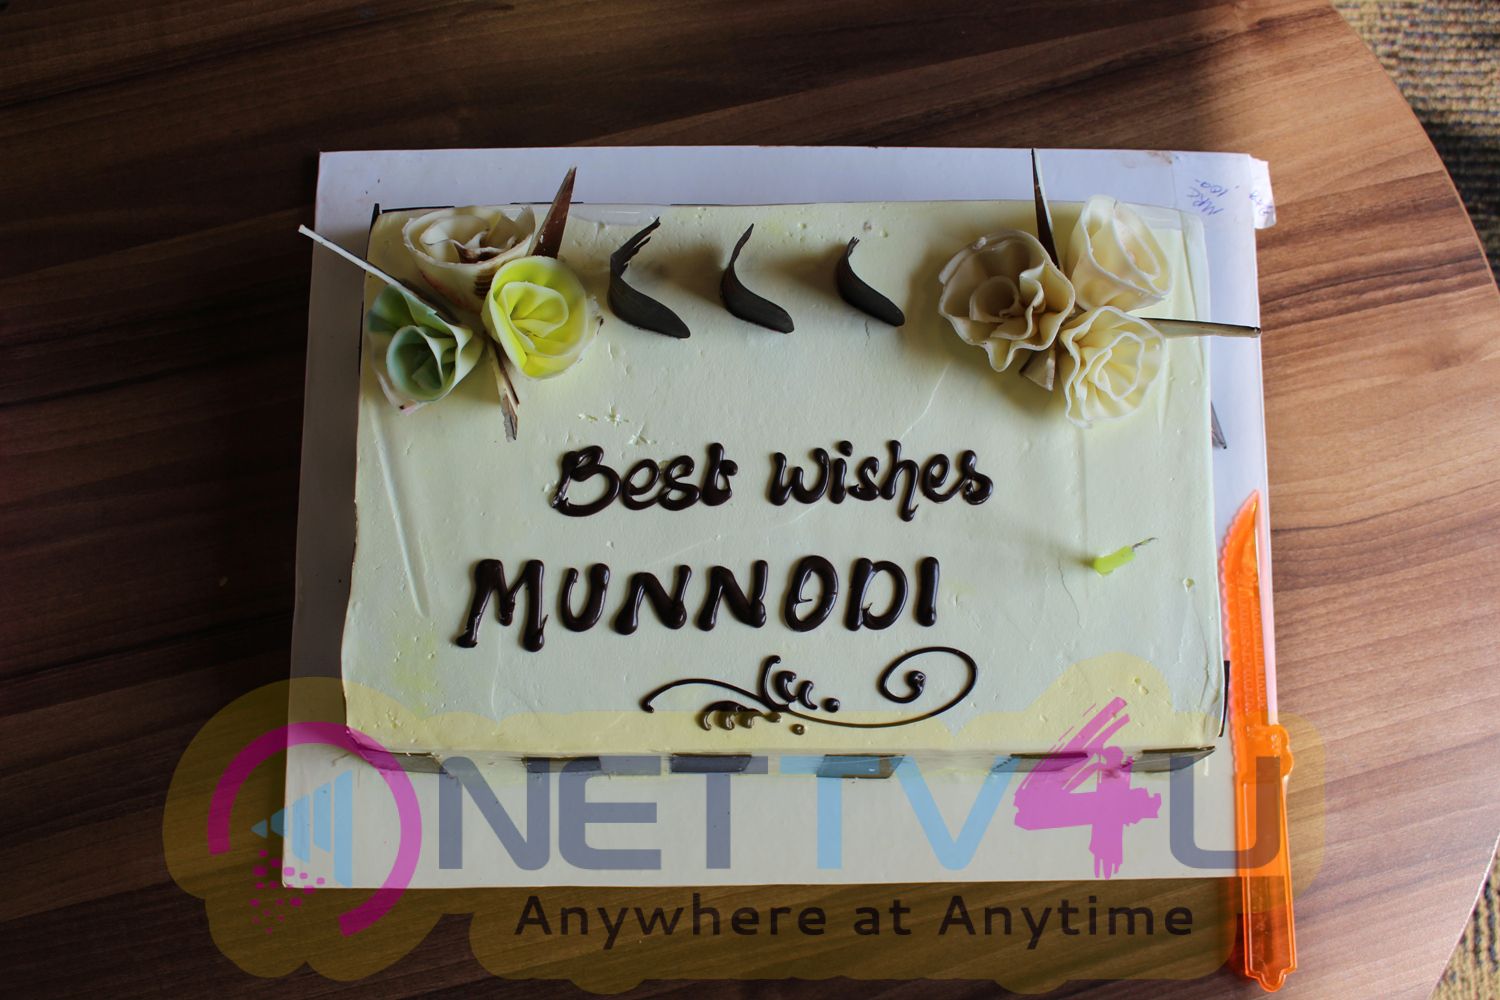 Munnodi Movie Audio Launch At Suriyan FM Attractive Photos Tamil Gallery